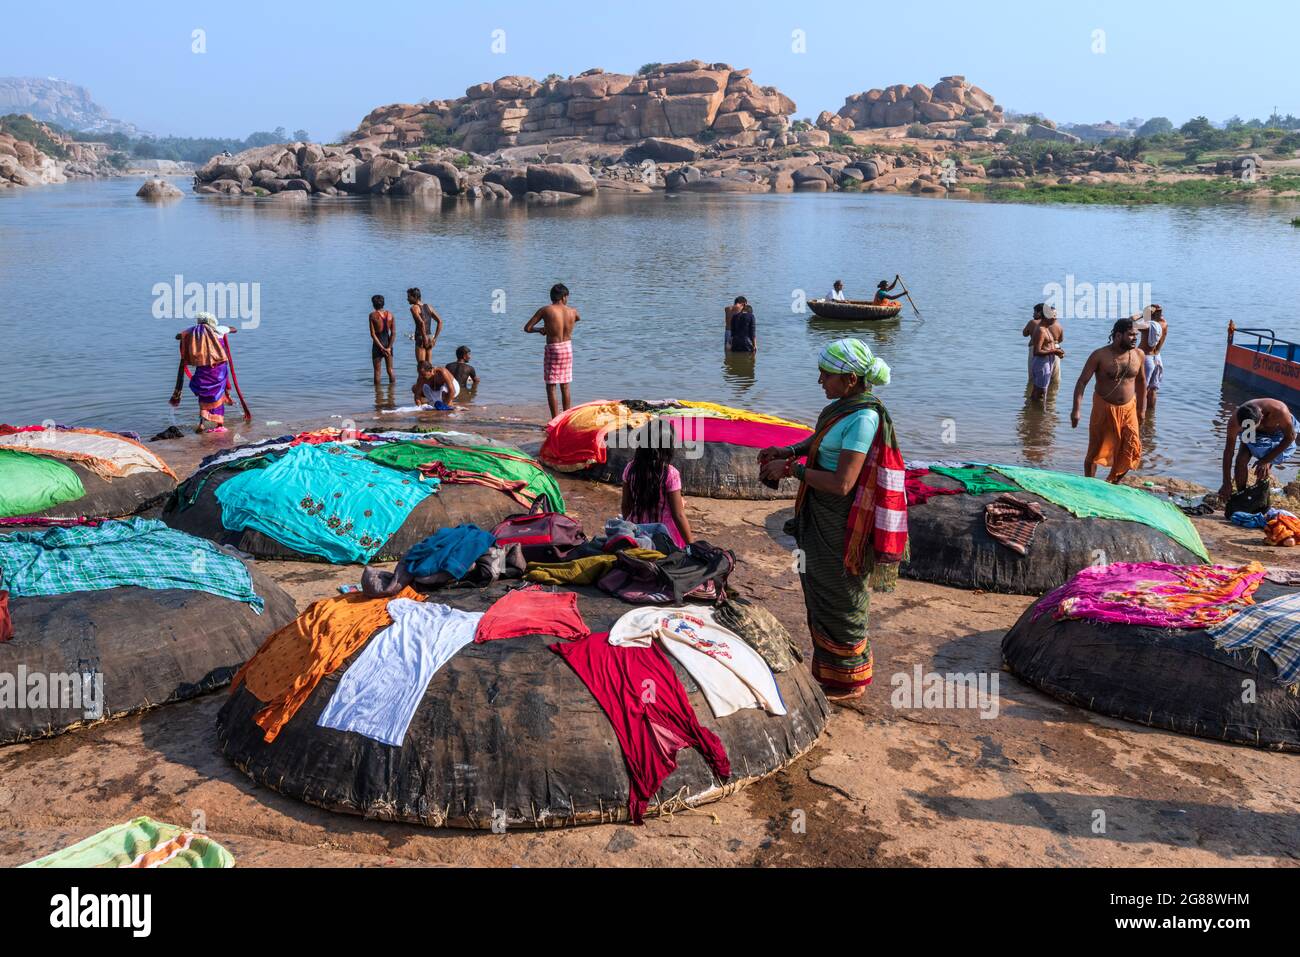 Hampi, Karnataka, India - January 10, 2020 : People bathing and getting ready on the banks of river Tungabhadra in Hampi Town. Stock Photo